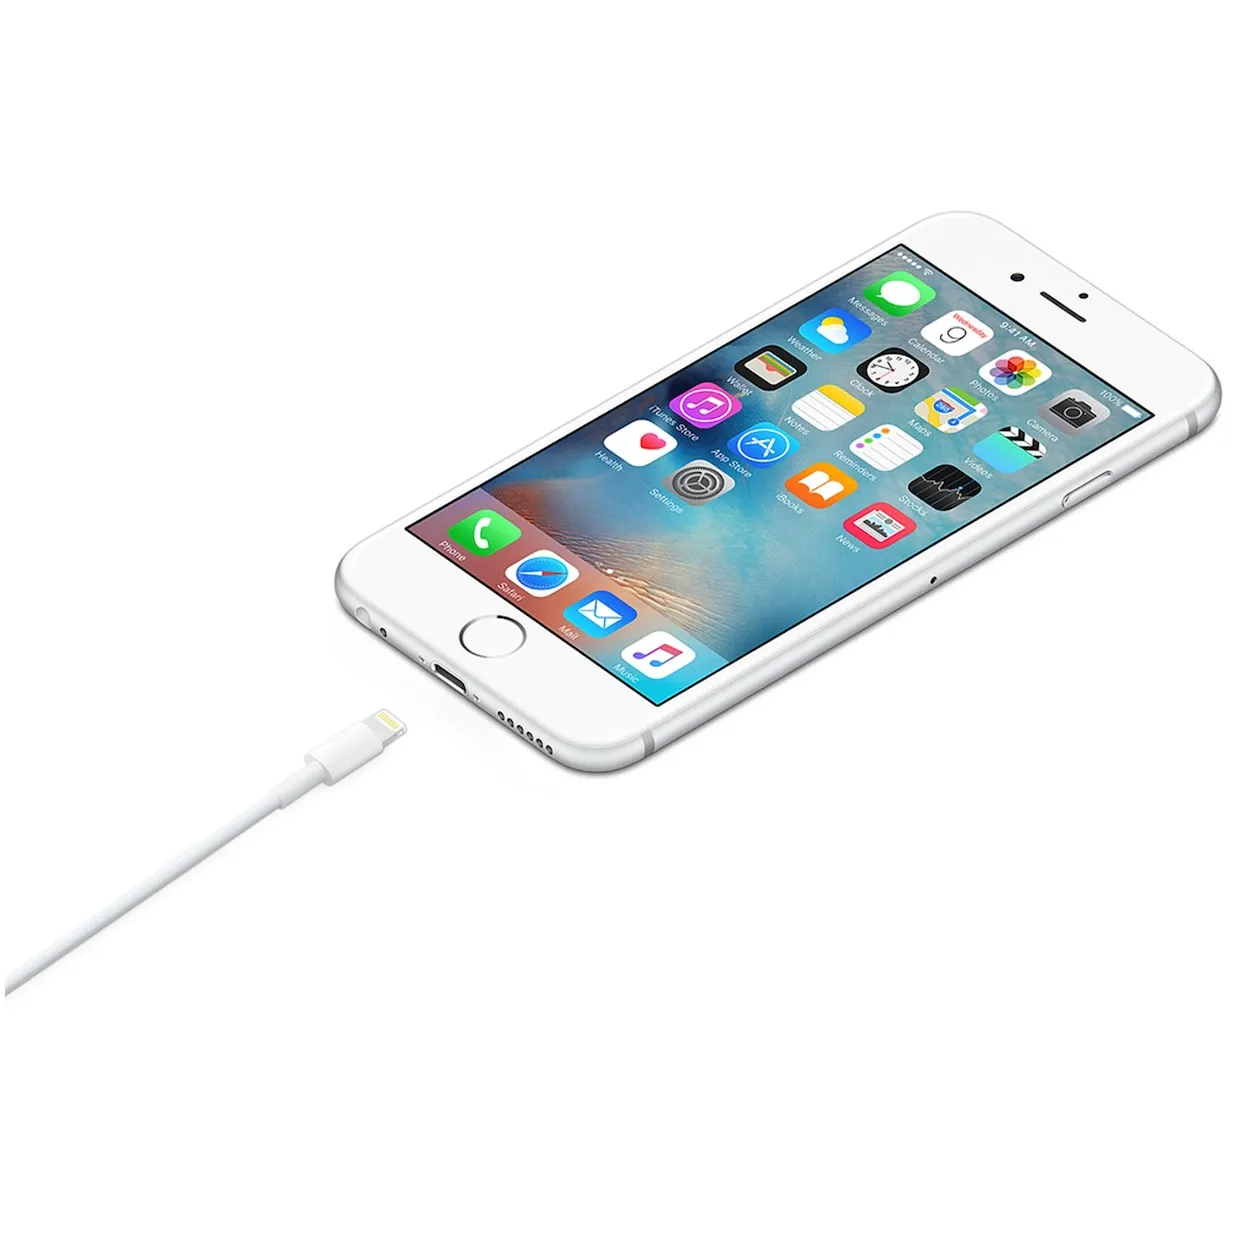 Apple Lightning-naar-USB-kabel (1 m)